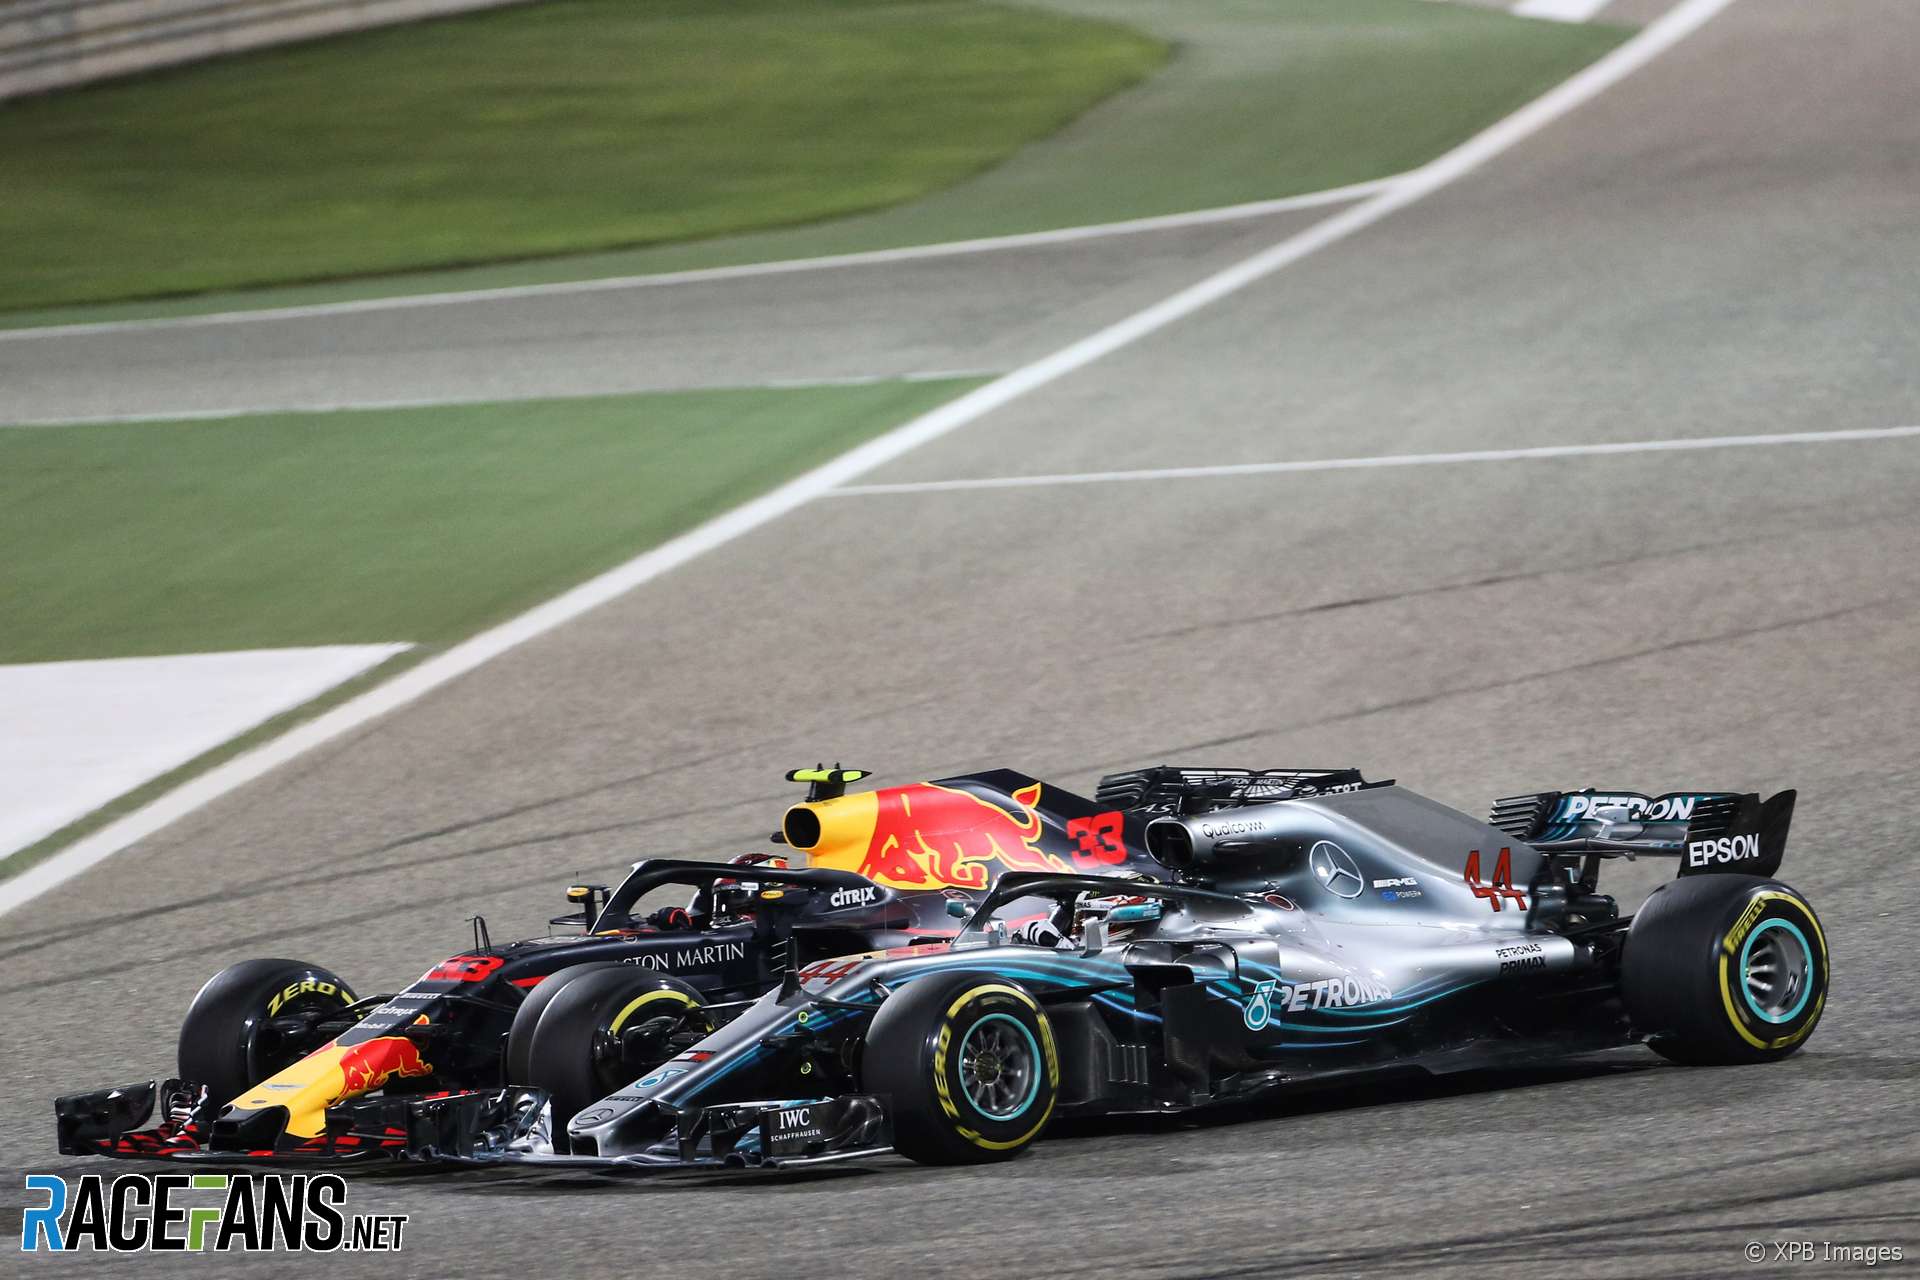 Lewis Hamilton, Max Verstappen, Bahrain International Circuit, 2018